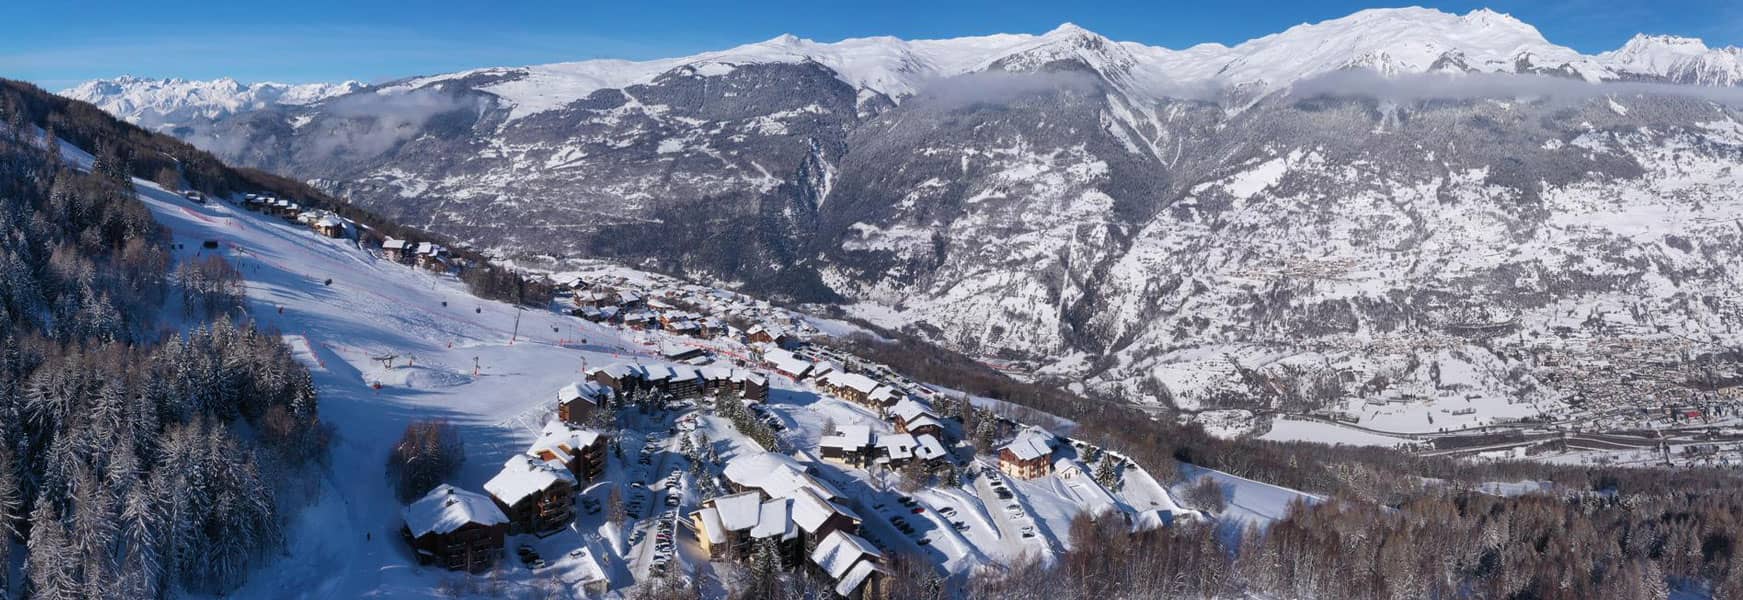 Location Ski Intersport La Plagne Montalbert